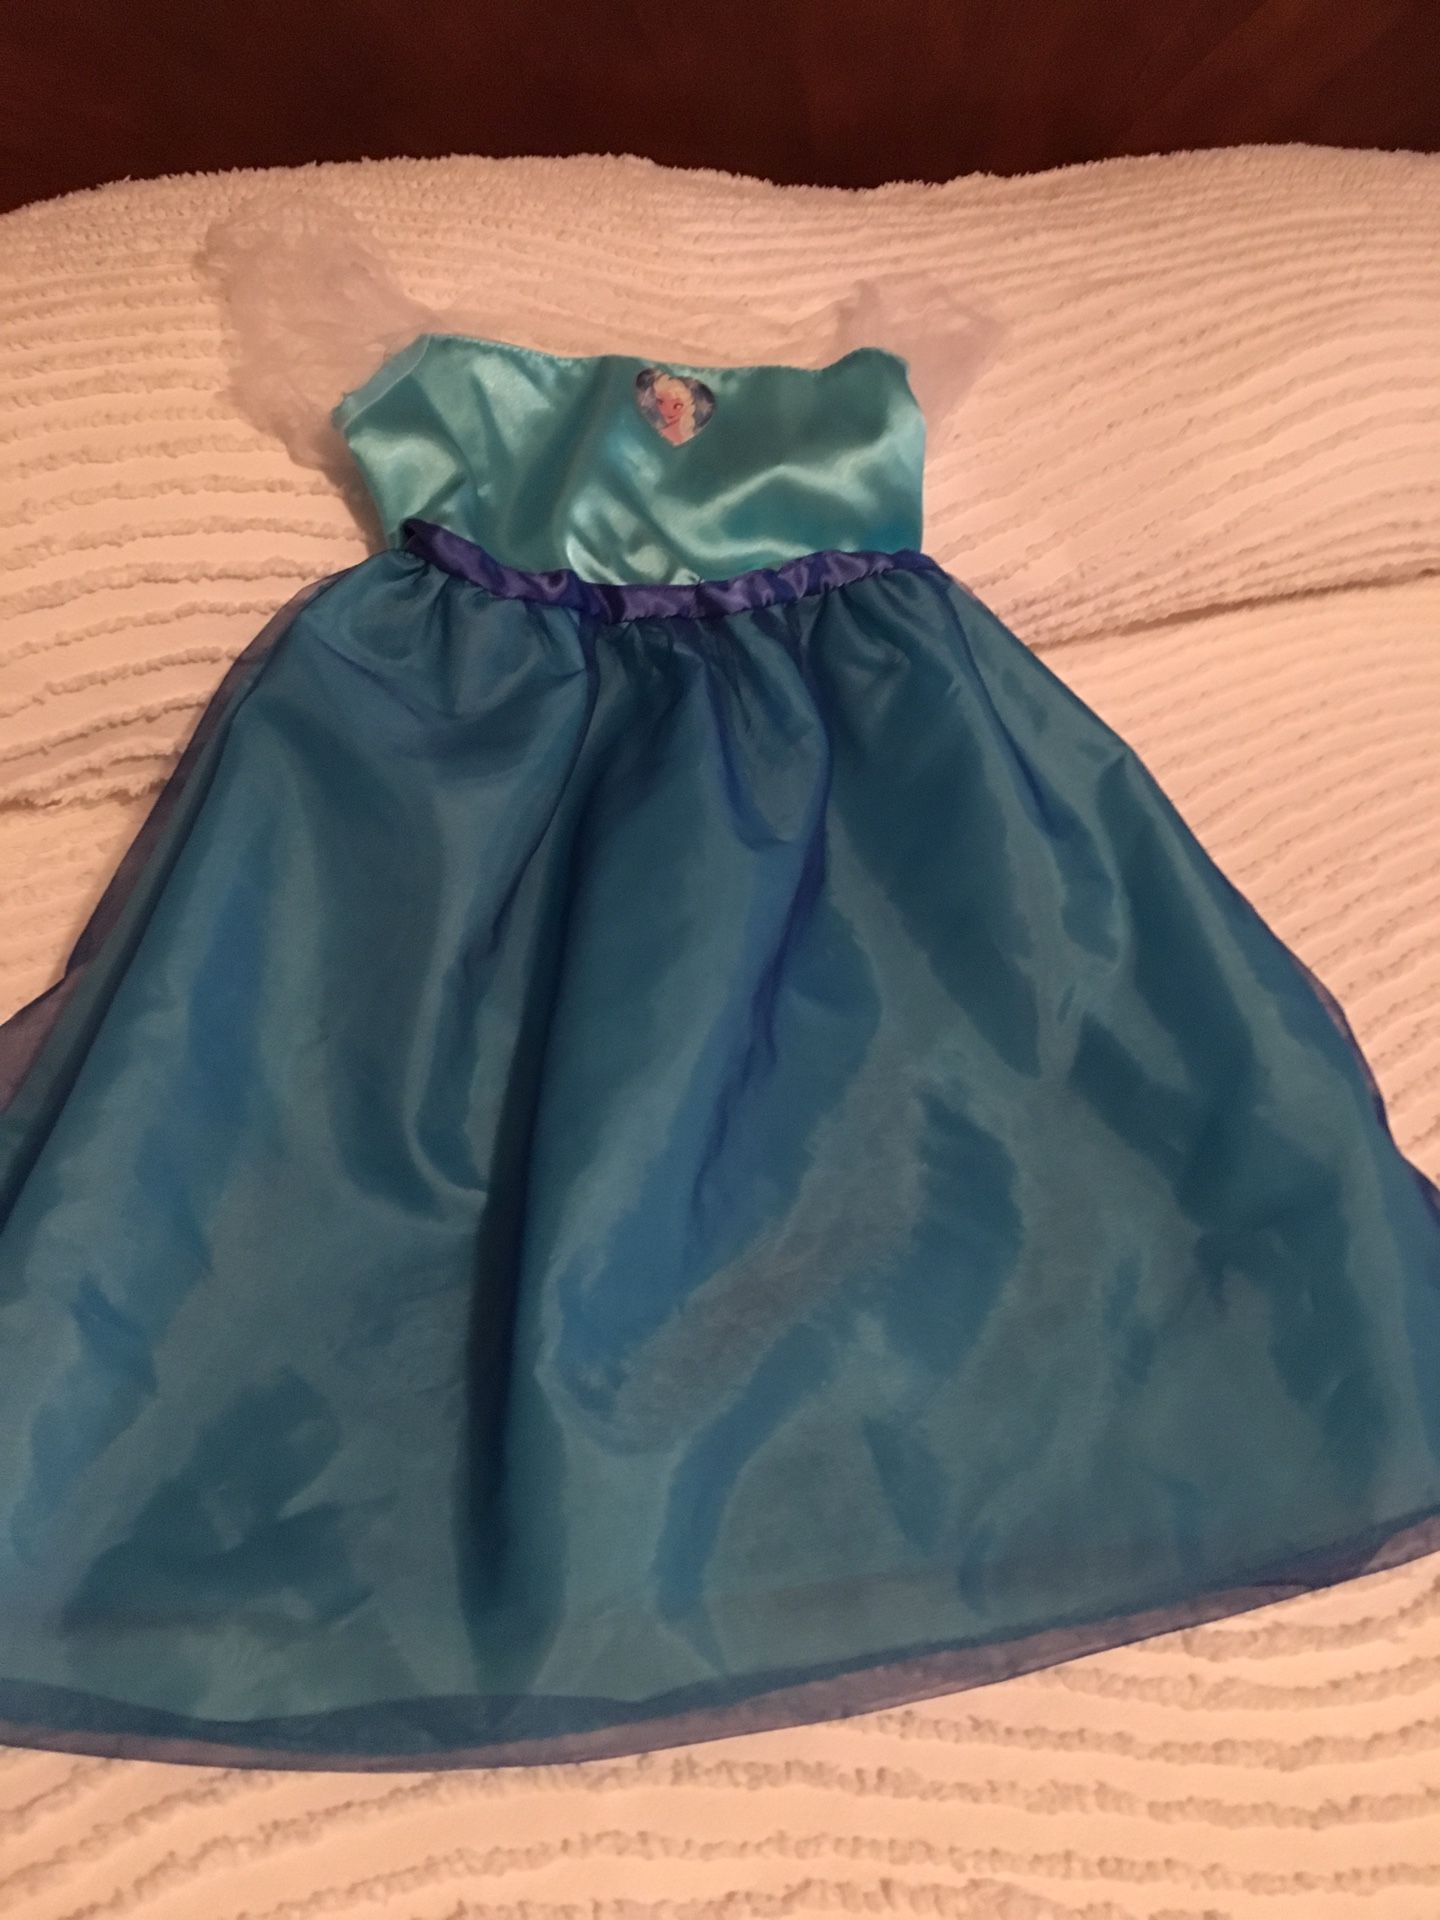 Disney’s Elsa dress